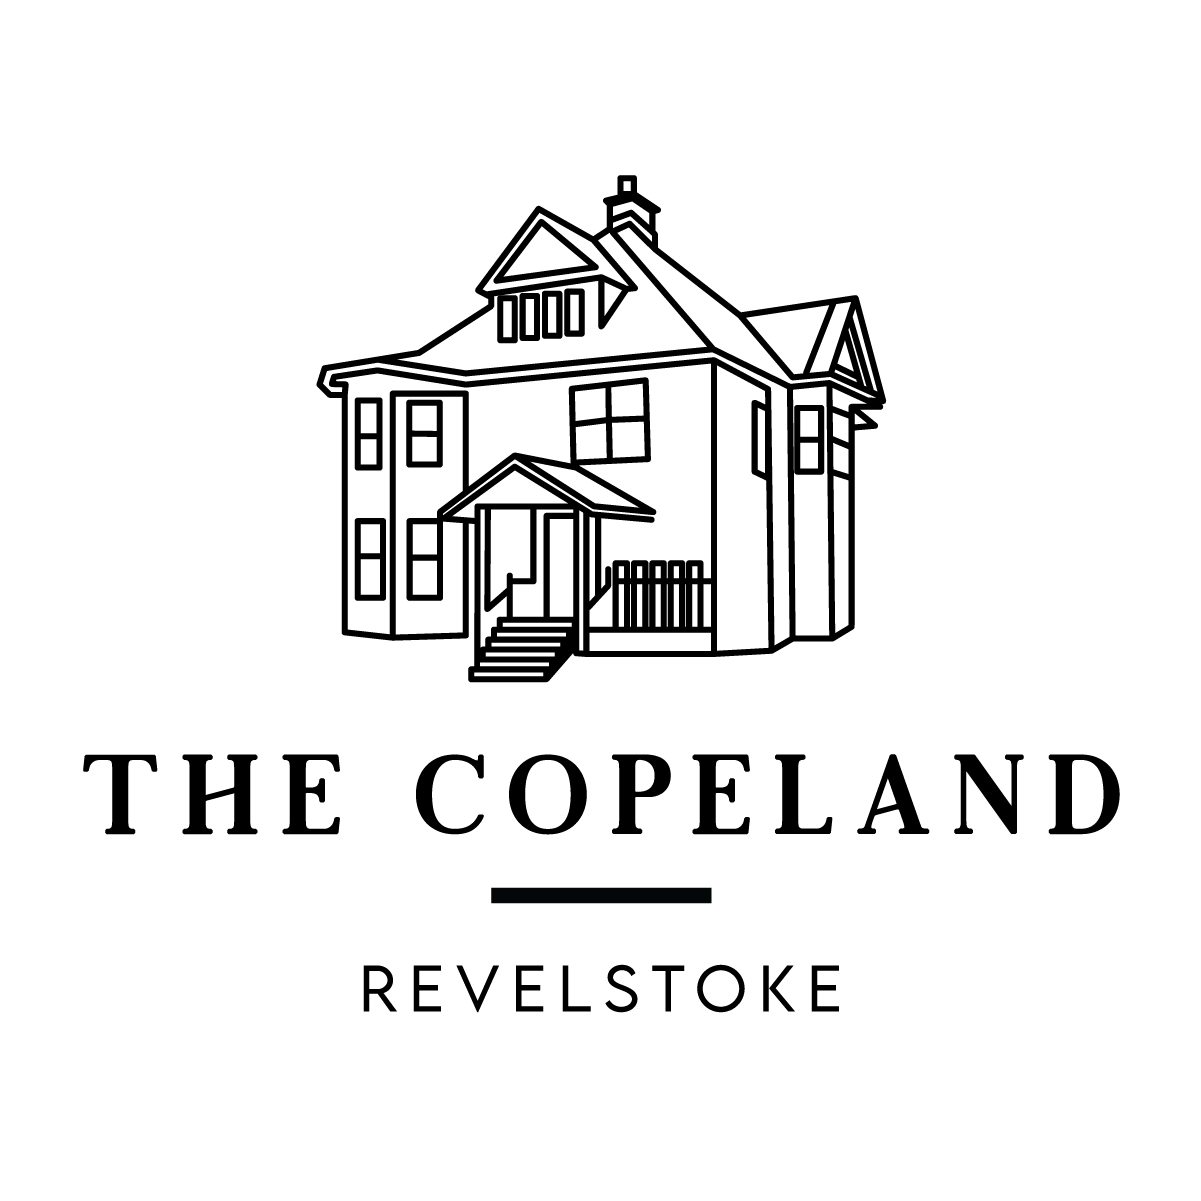 The Copeland